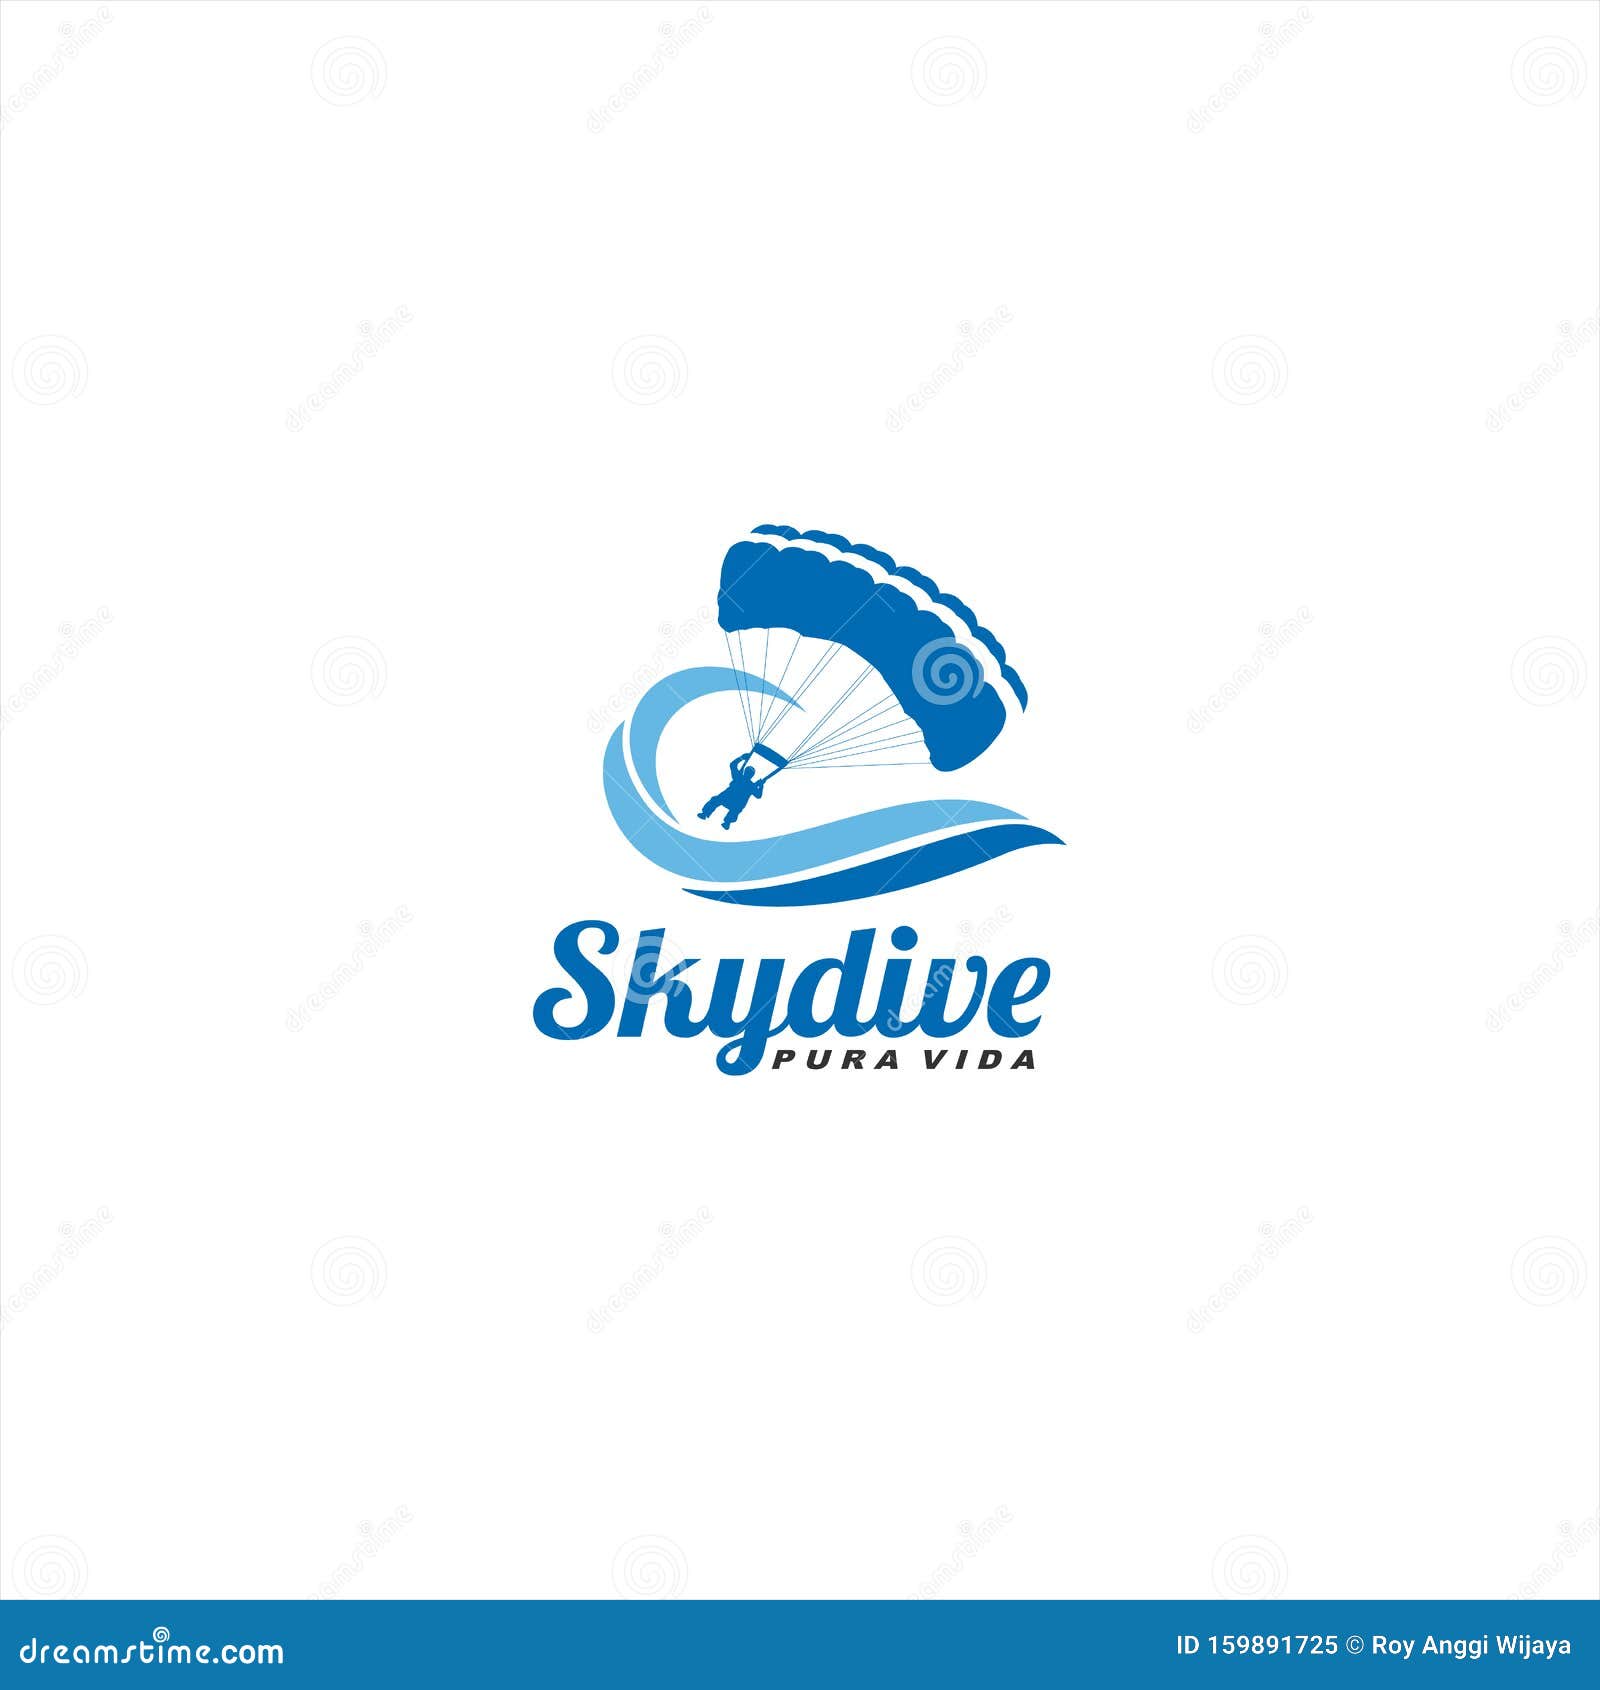 skydive logo  inspiration idea